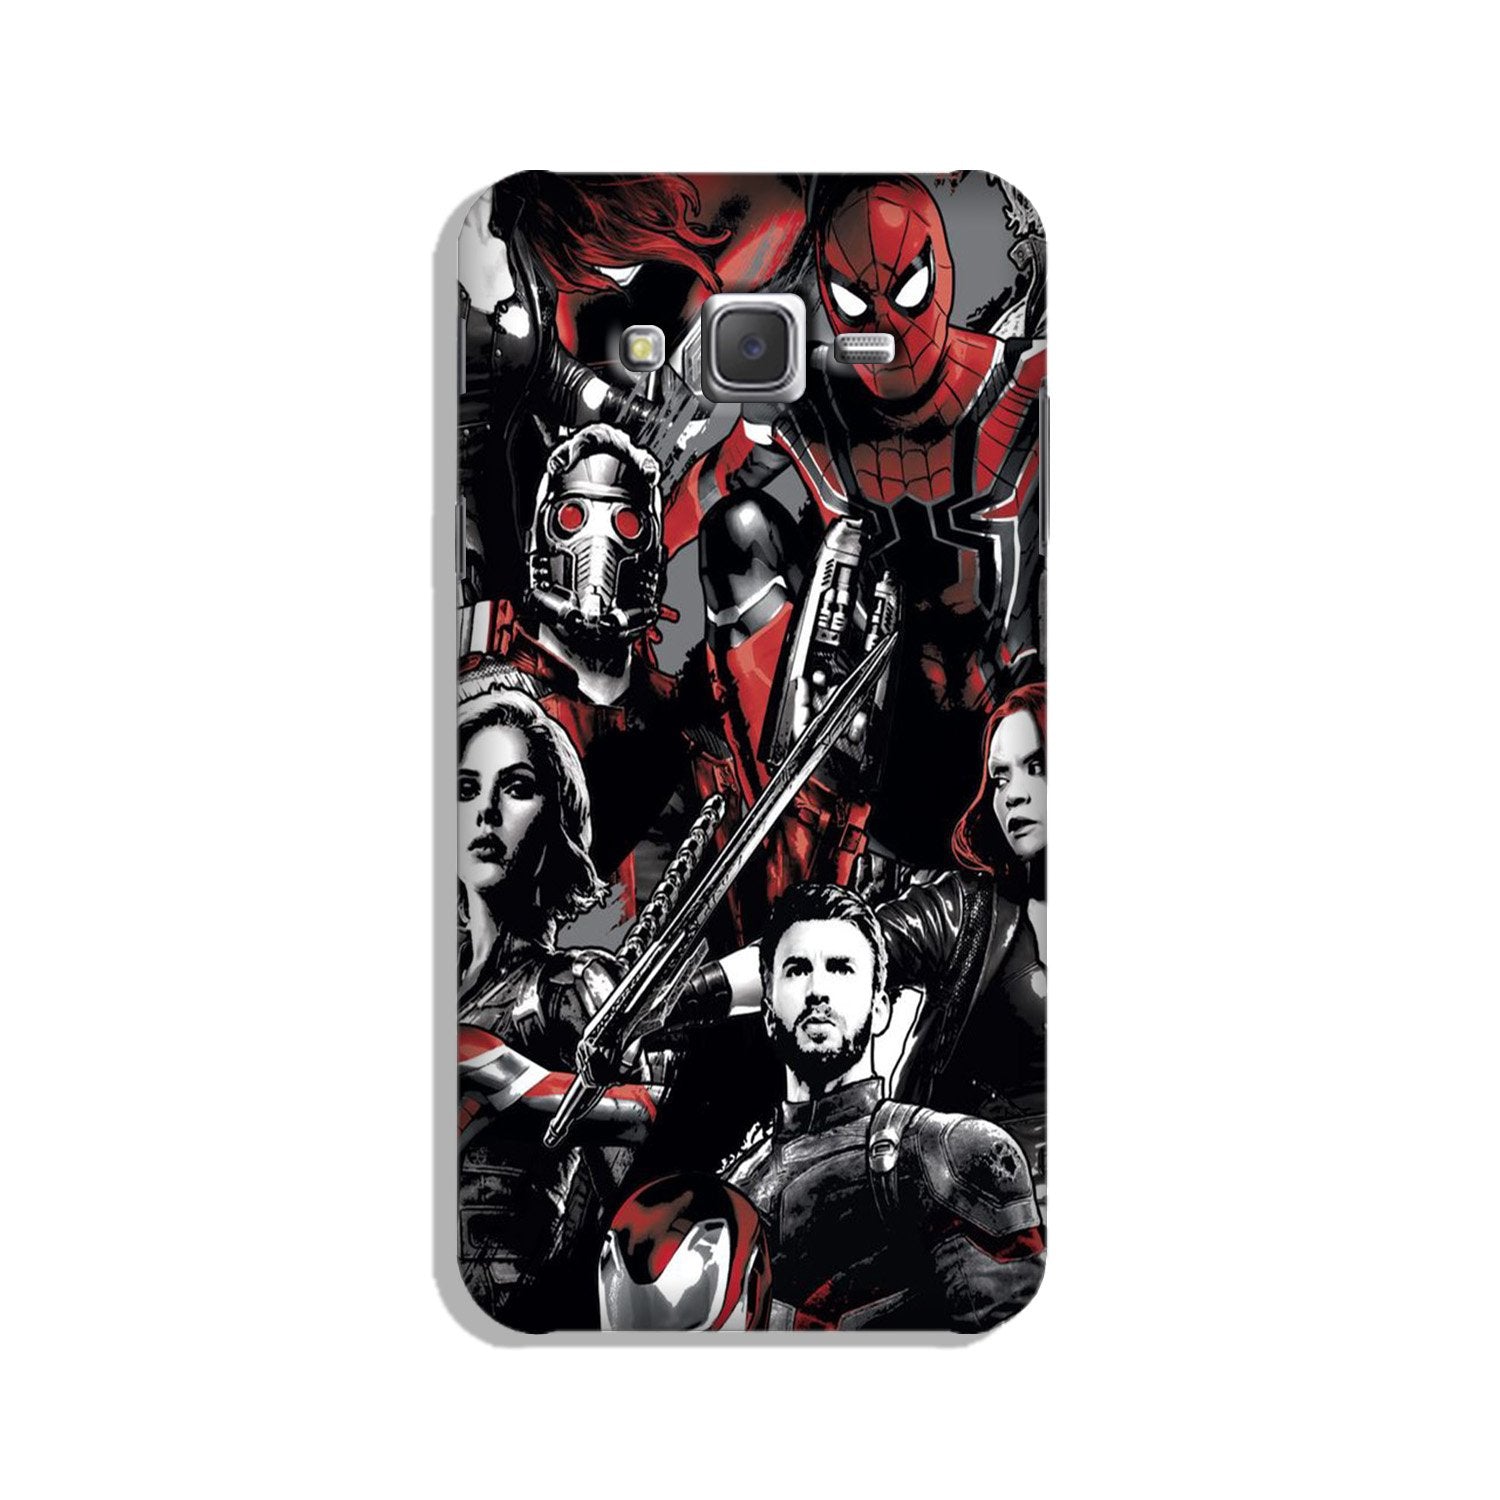 Avengers Case for Galaxy J7 (2015) (Design - 190)